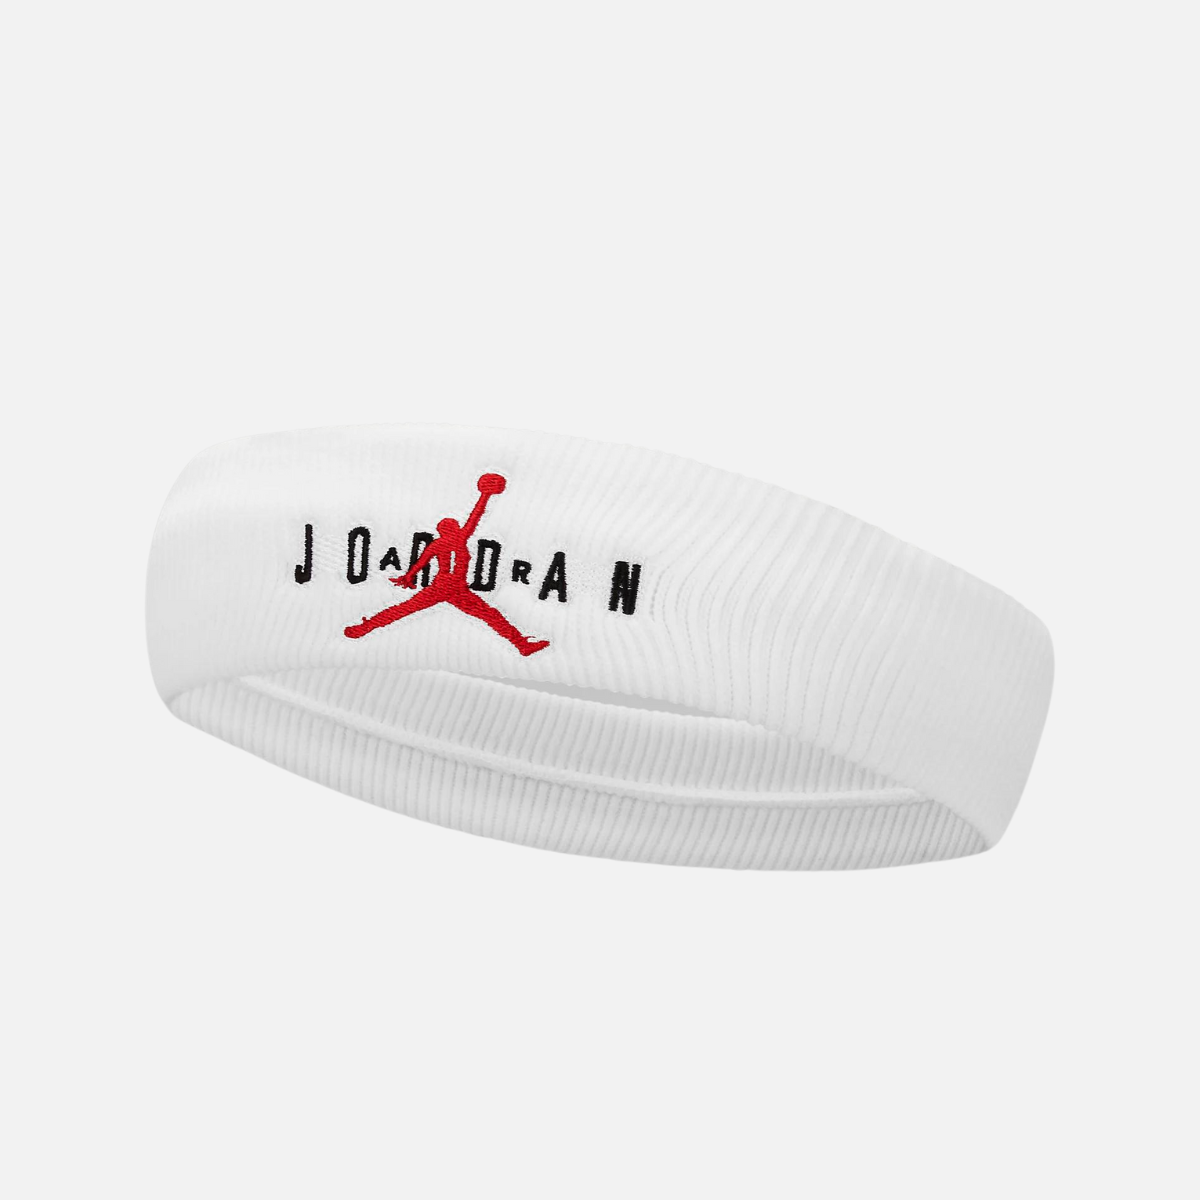 Nike Jordan Jumpman Men's Headband -Black/Gym Red/ White/Gym Red